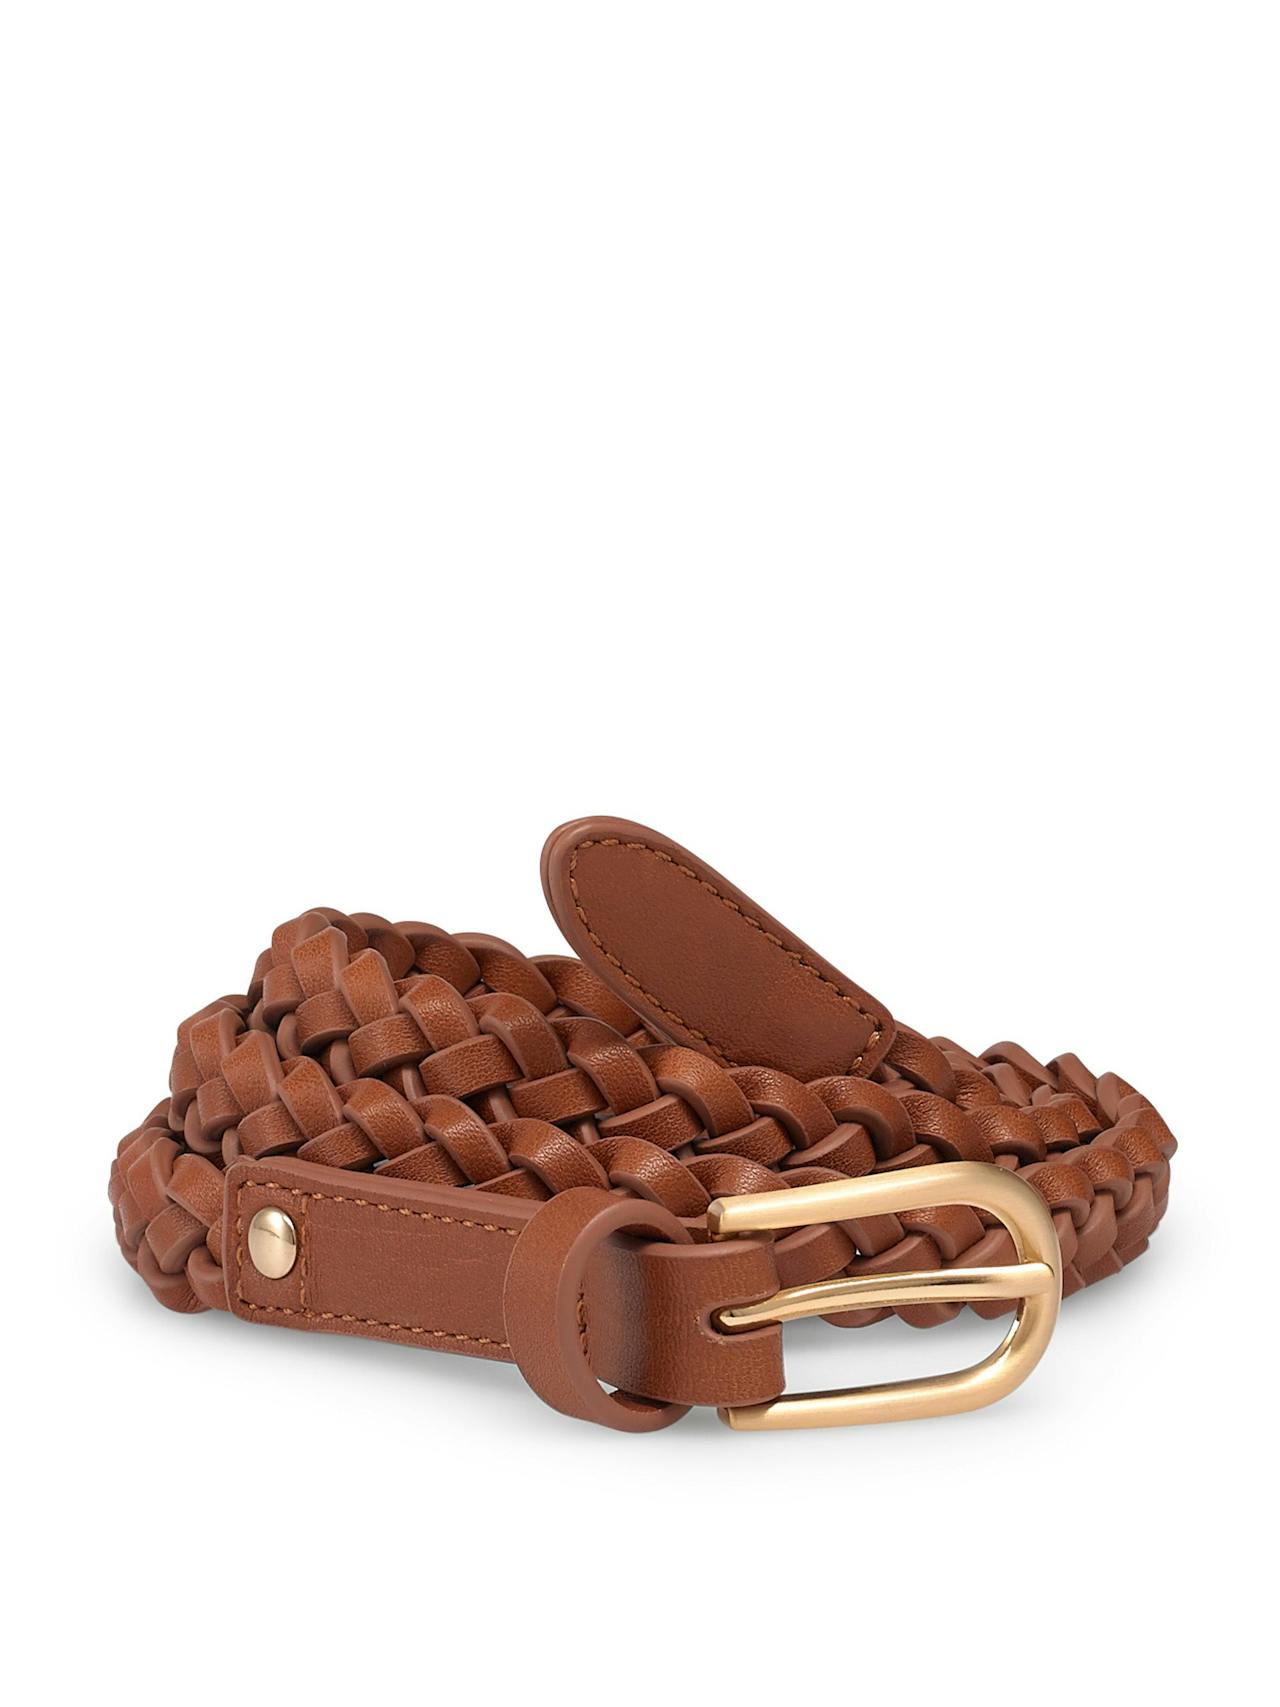 Arrow hand-plaited leather belt